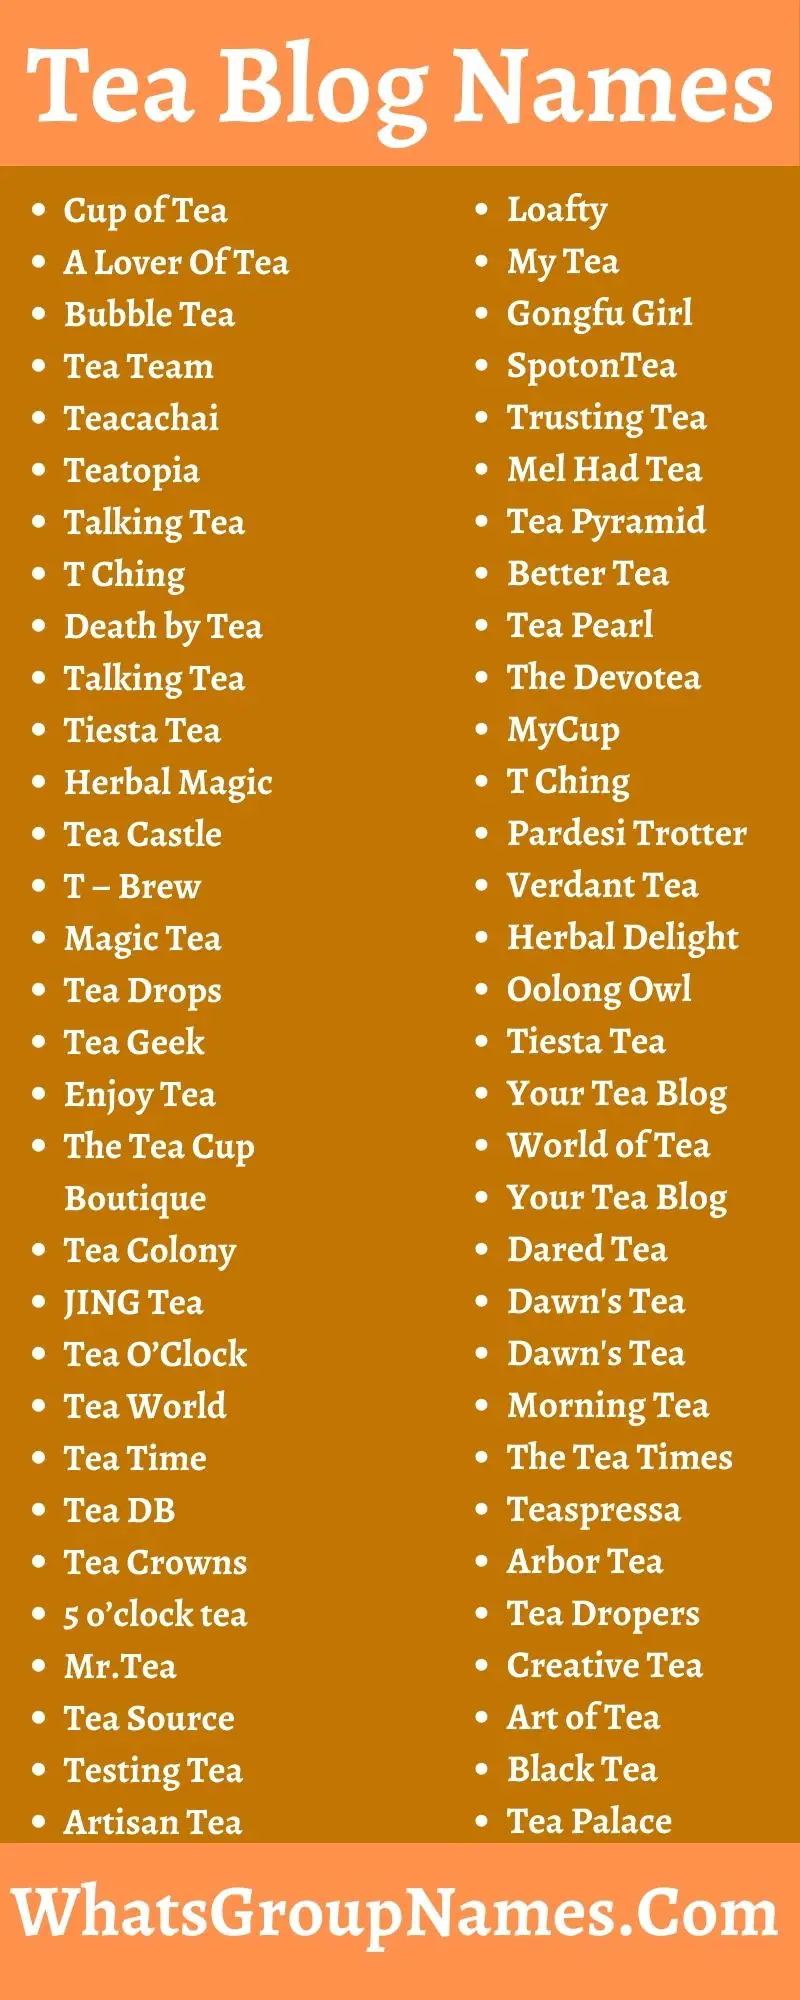 Tea Blog Names